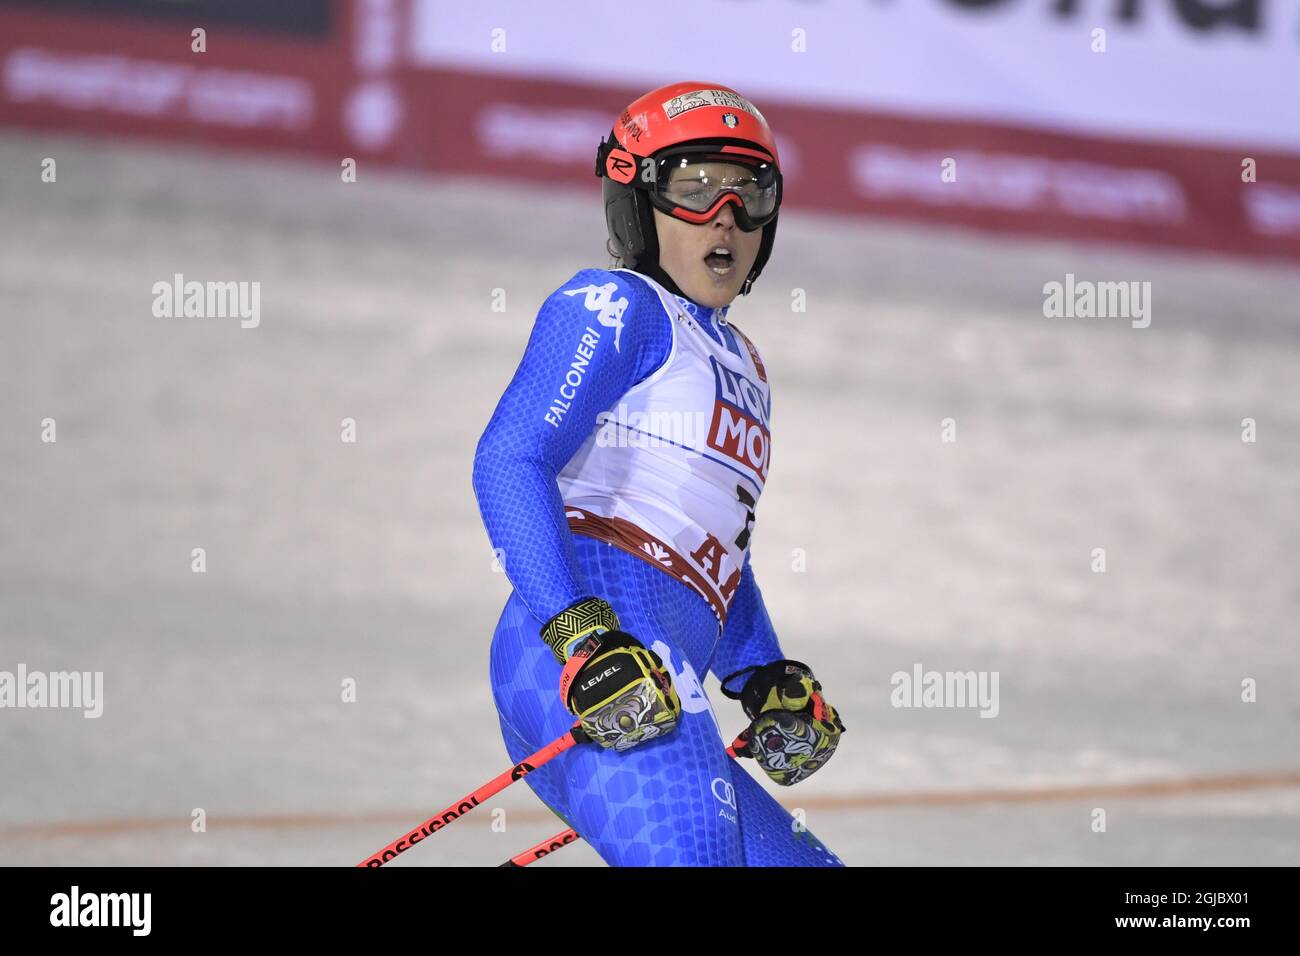 Federica Brignone, Italia, si è piazzata quinta nel gigantesco slalom femminile al FIS Alpine Ski World Championships in are, Svezia, 14 febbraio 2019. Foto: Pontus Lundahl / TT Foto Stock